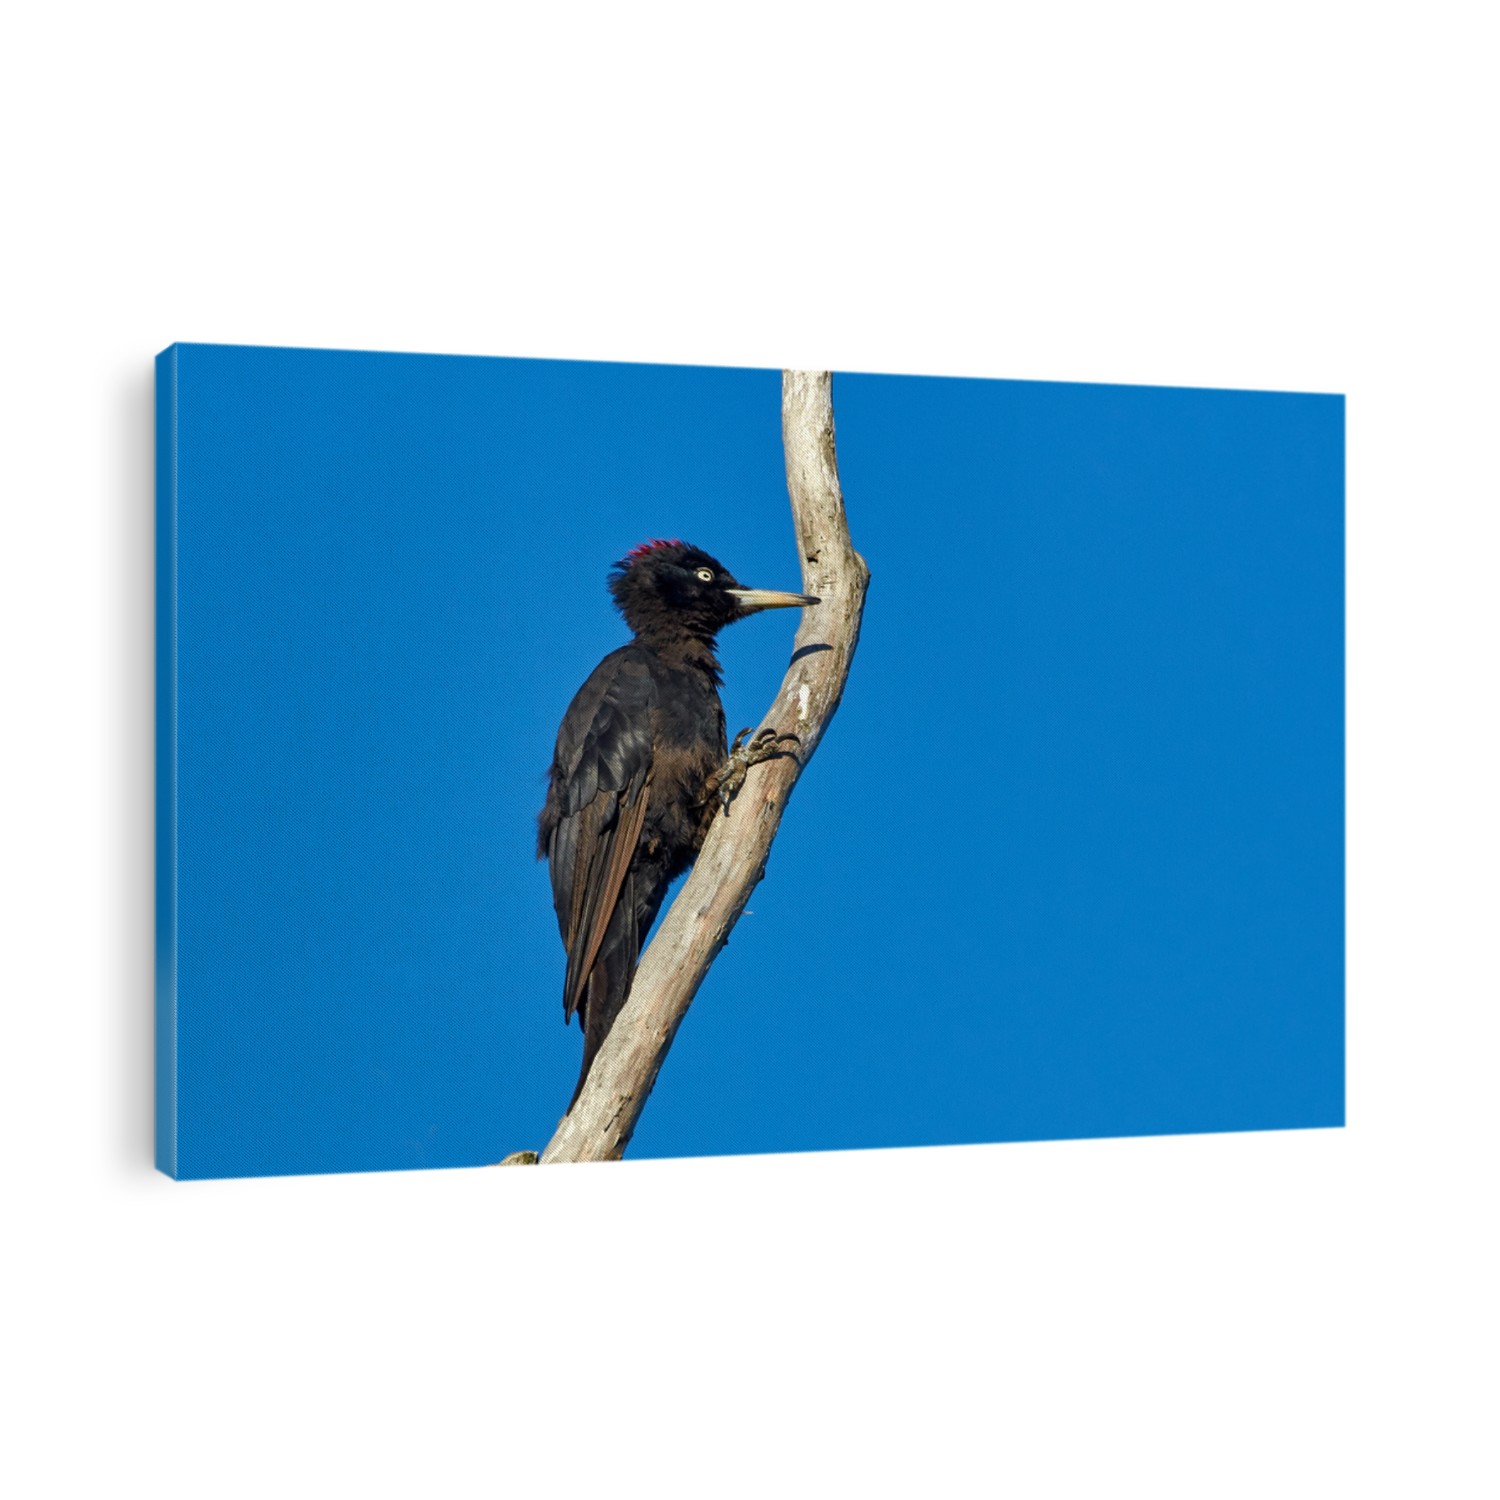 The Black Woodpecker ( Dryocopus martius) on the branch